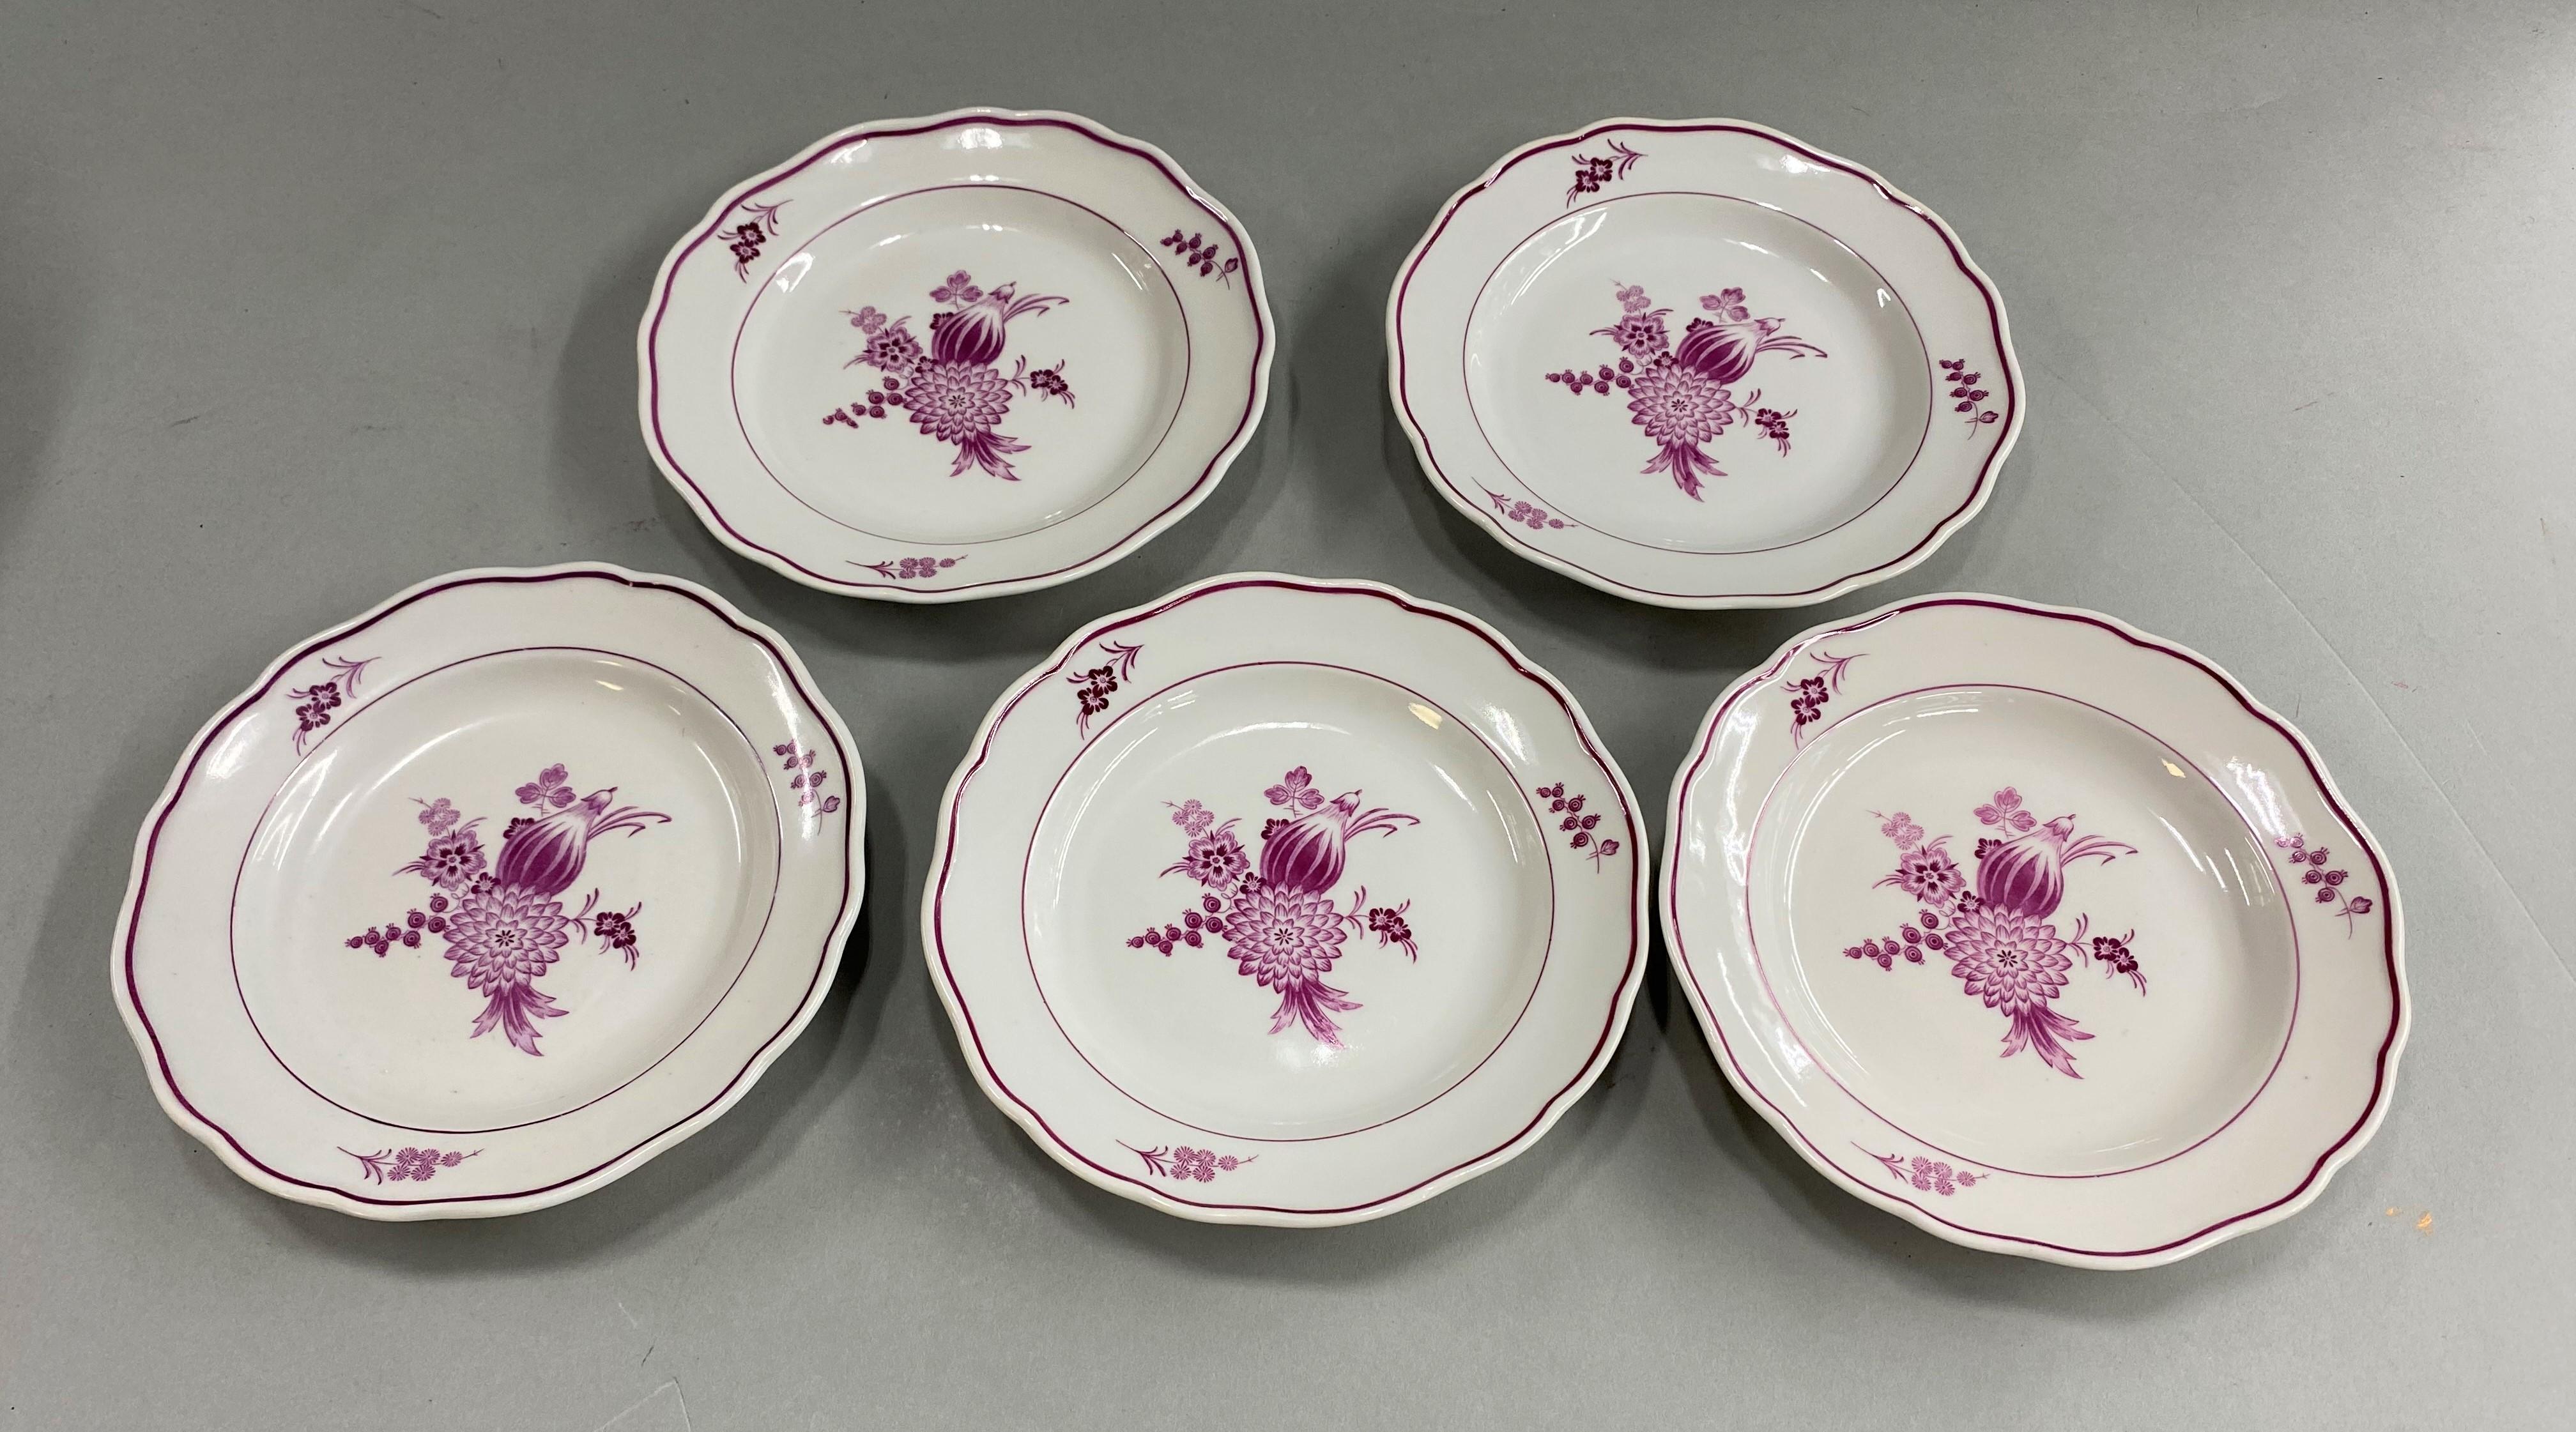 49-Piece Meissen Porcelain Dinner Service in Rare Puce/Purple Color For Sale 7